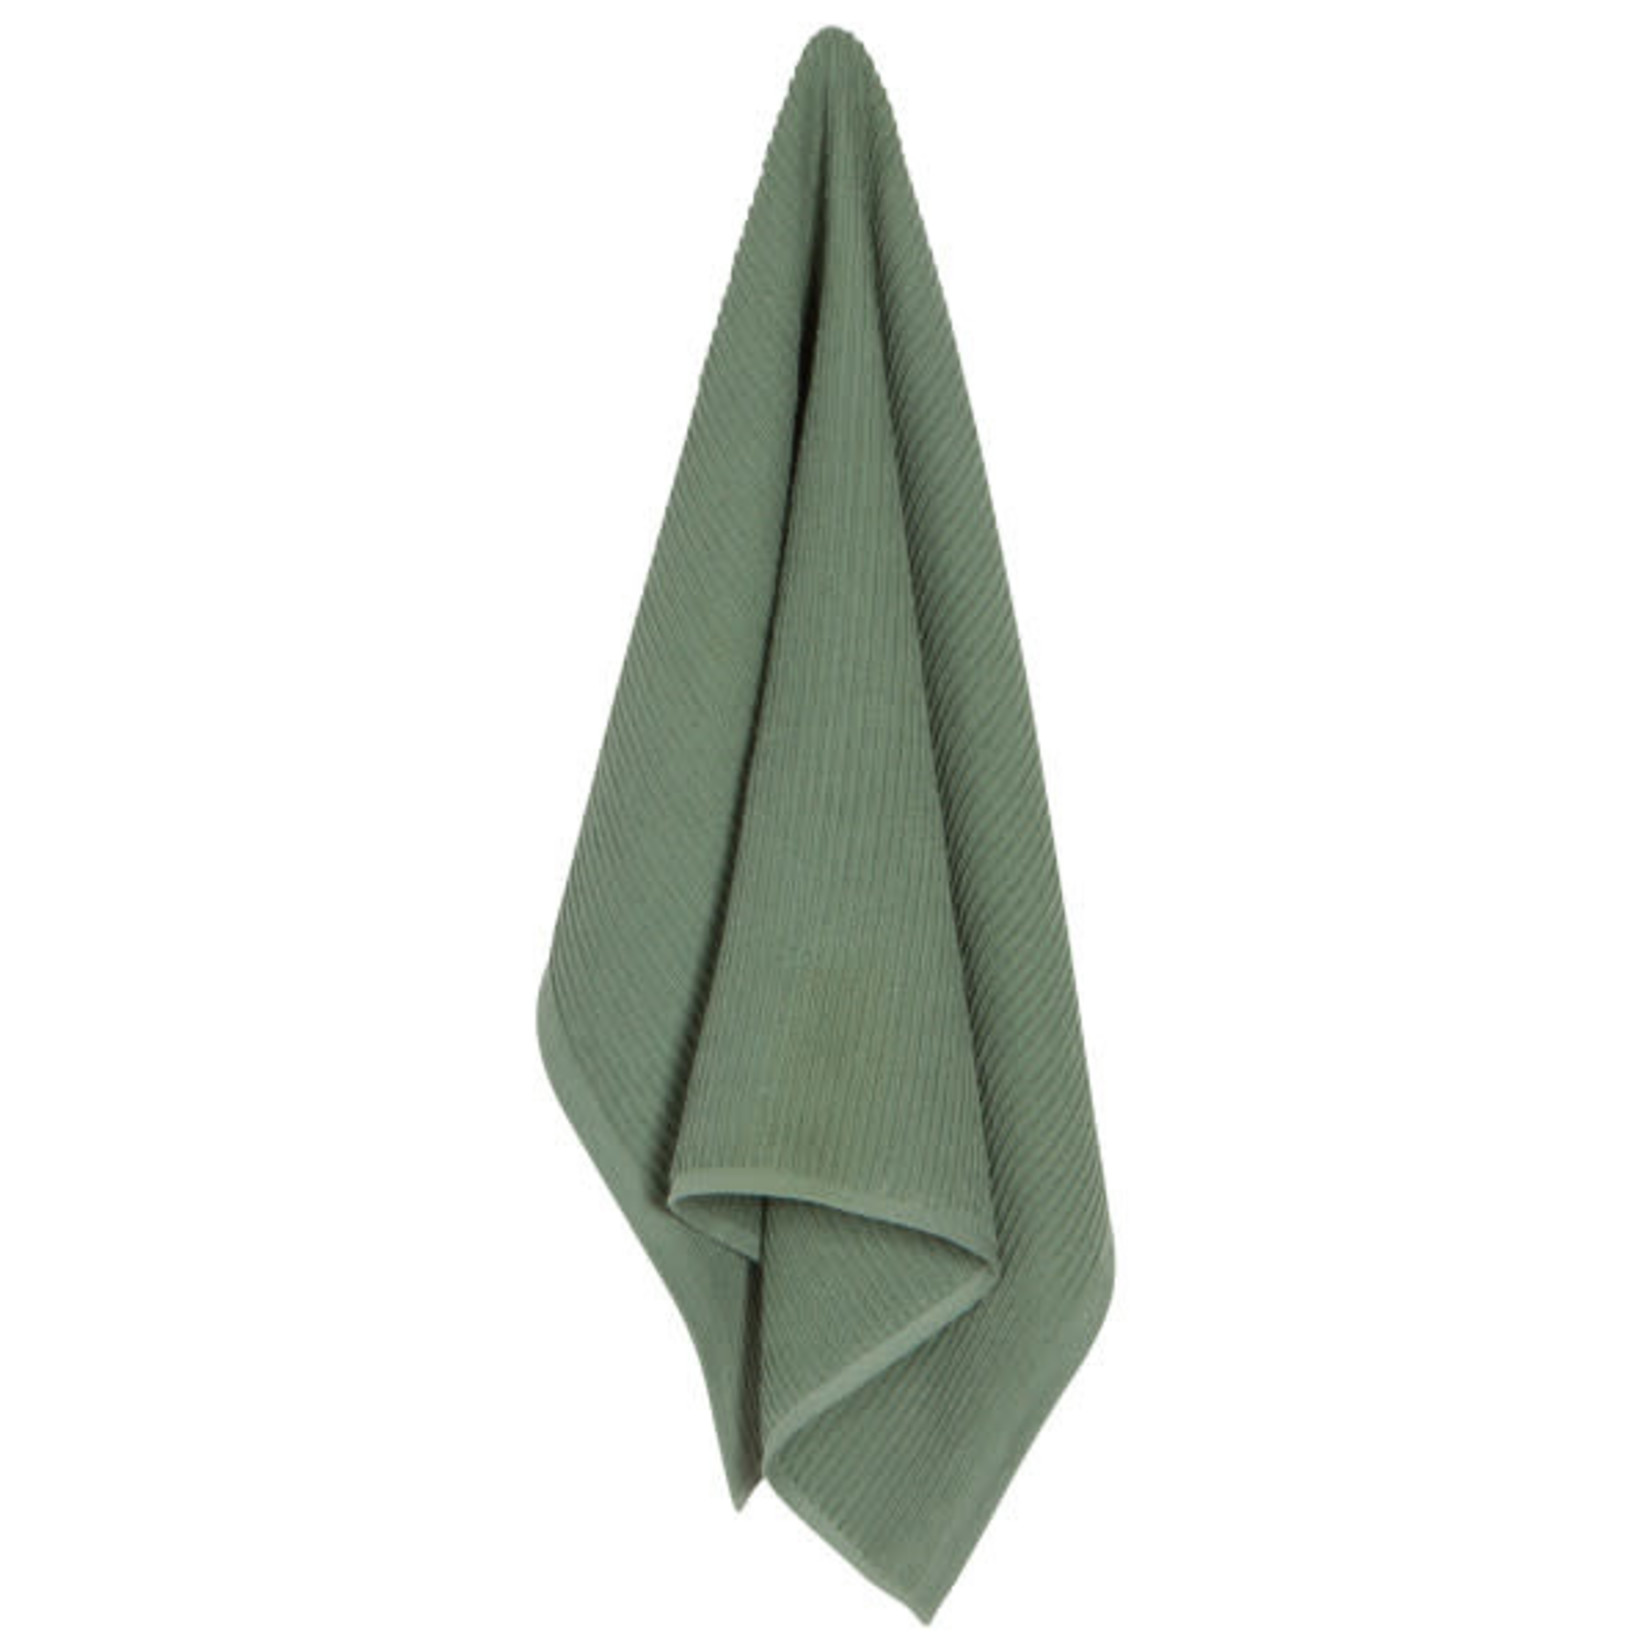 Ripple Tea Towel - Elm Green